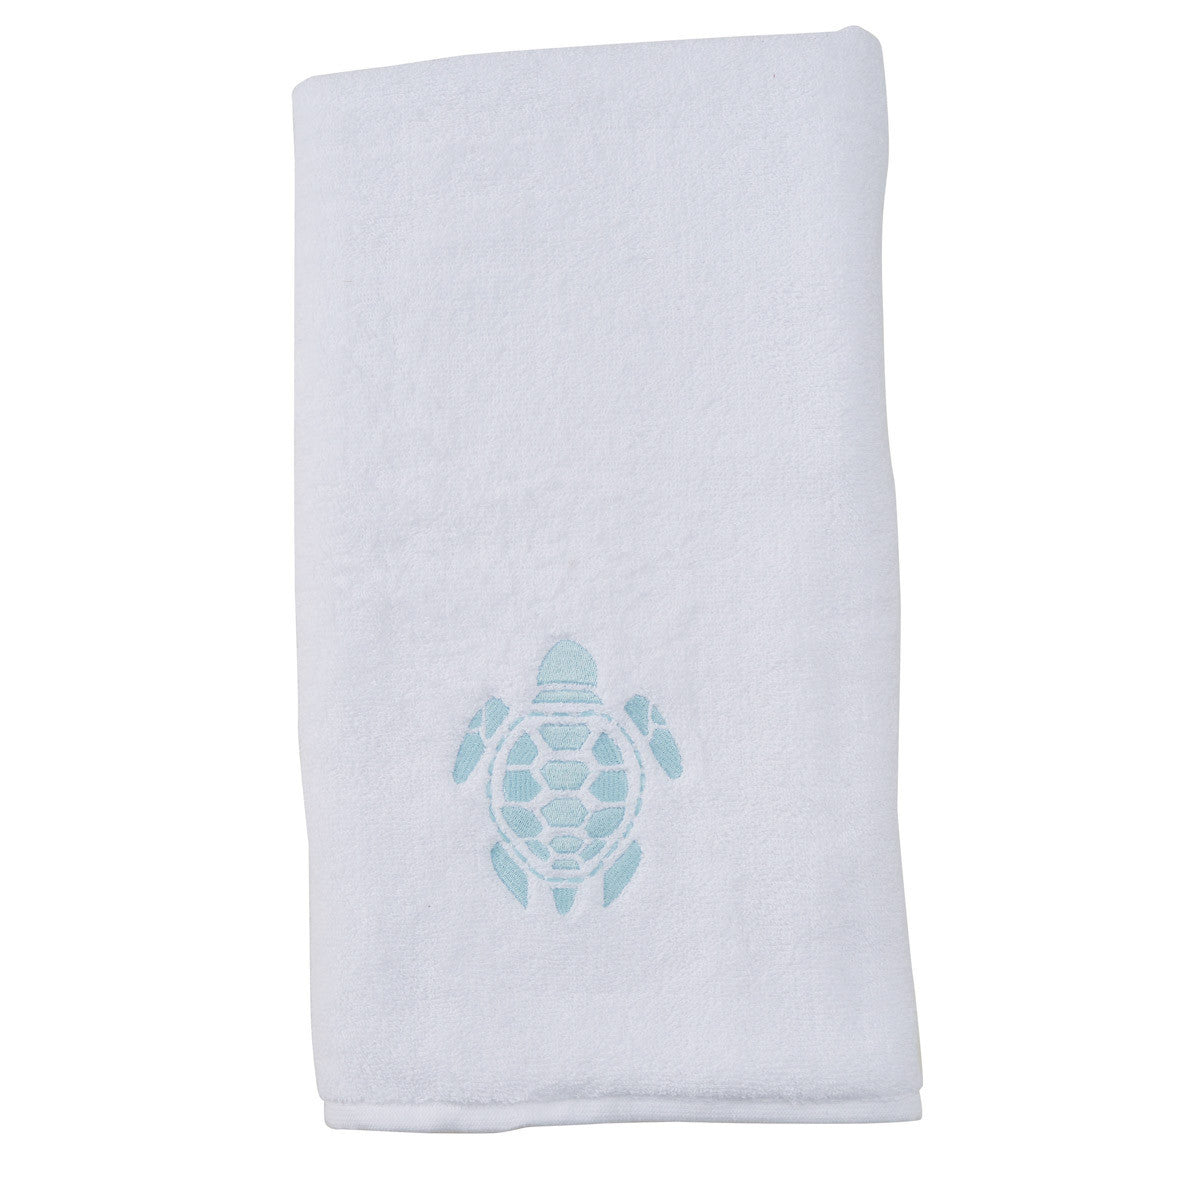 Turtles Bath Towel - Set of 2 Park Designs